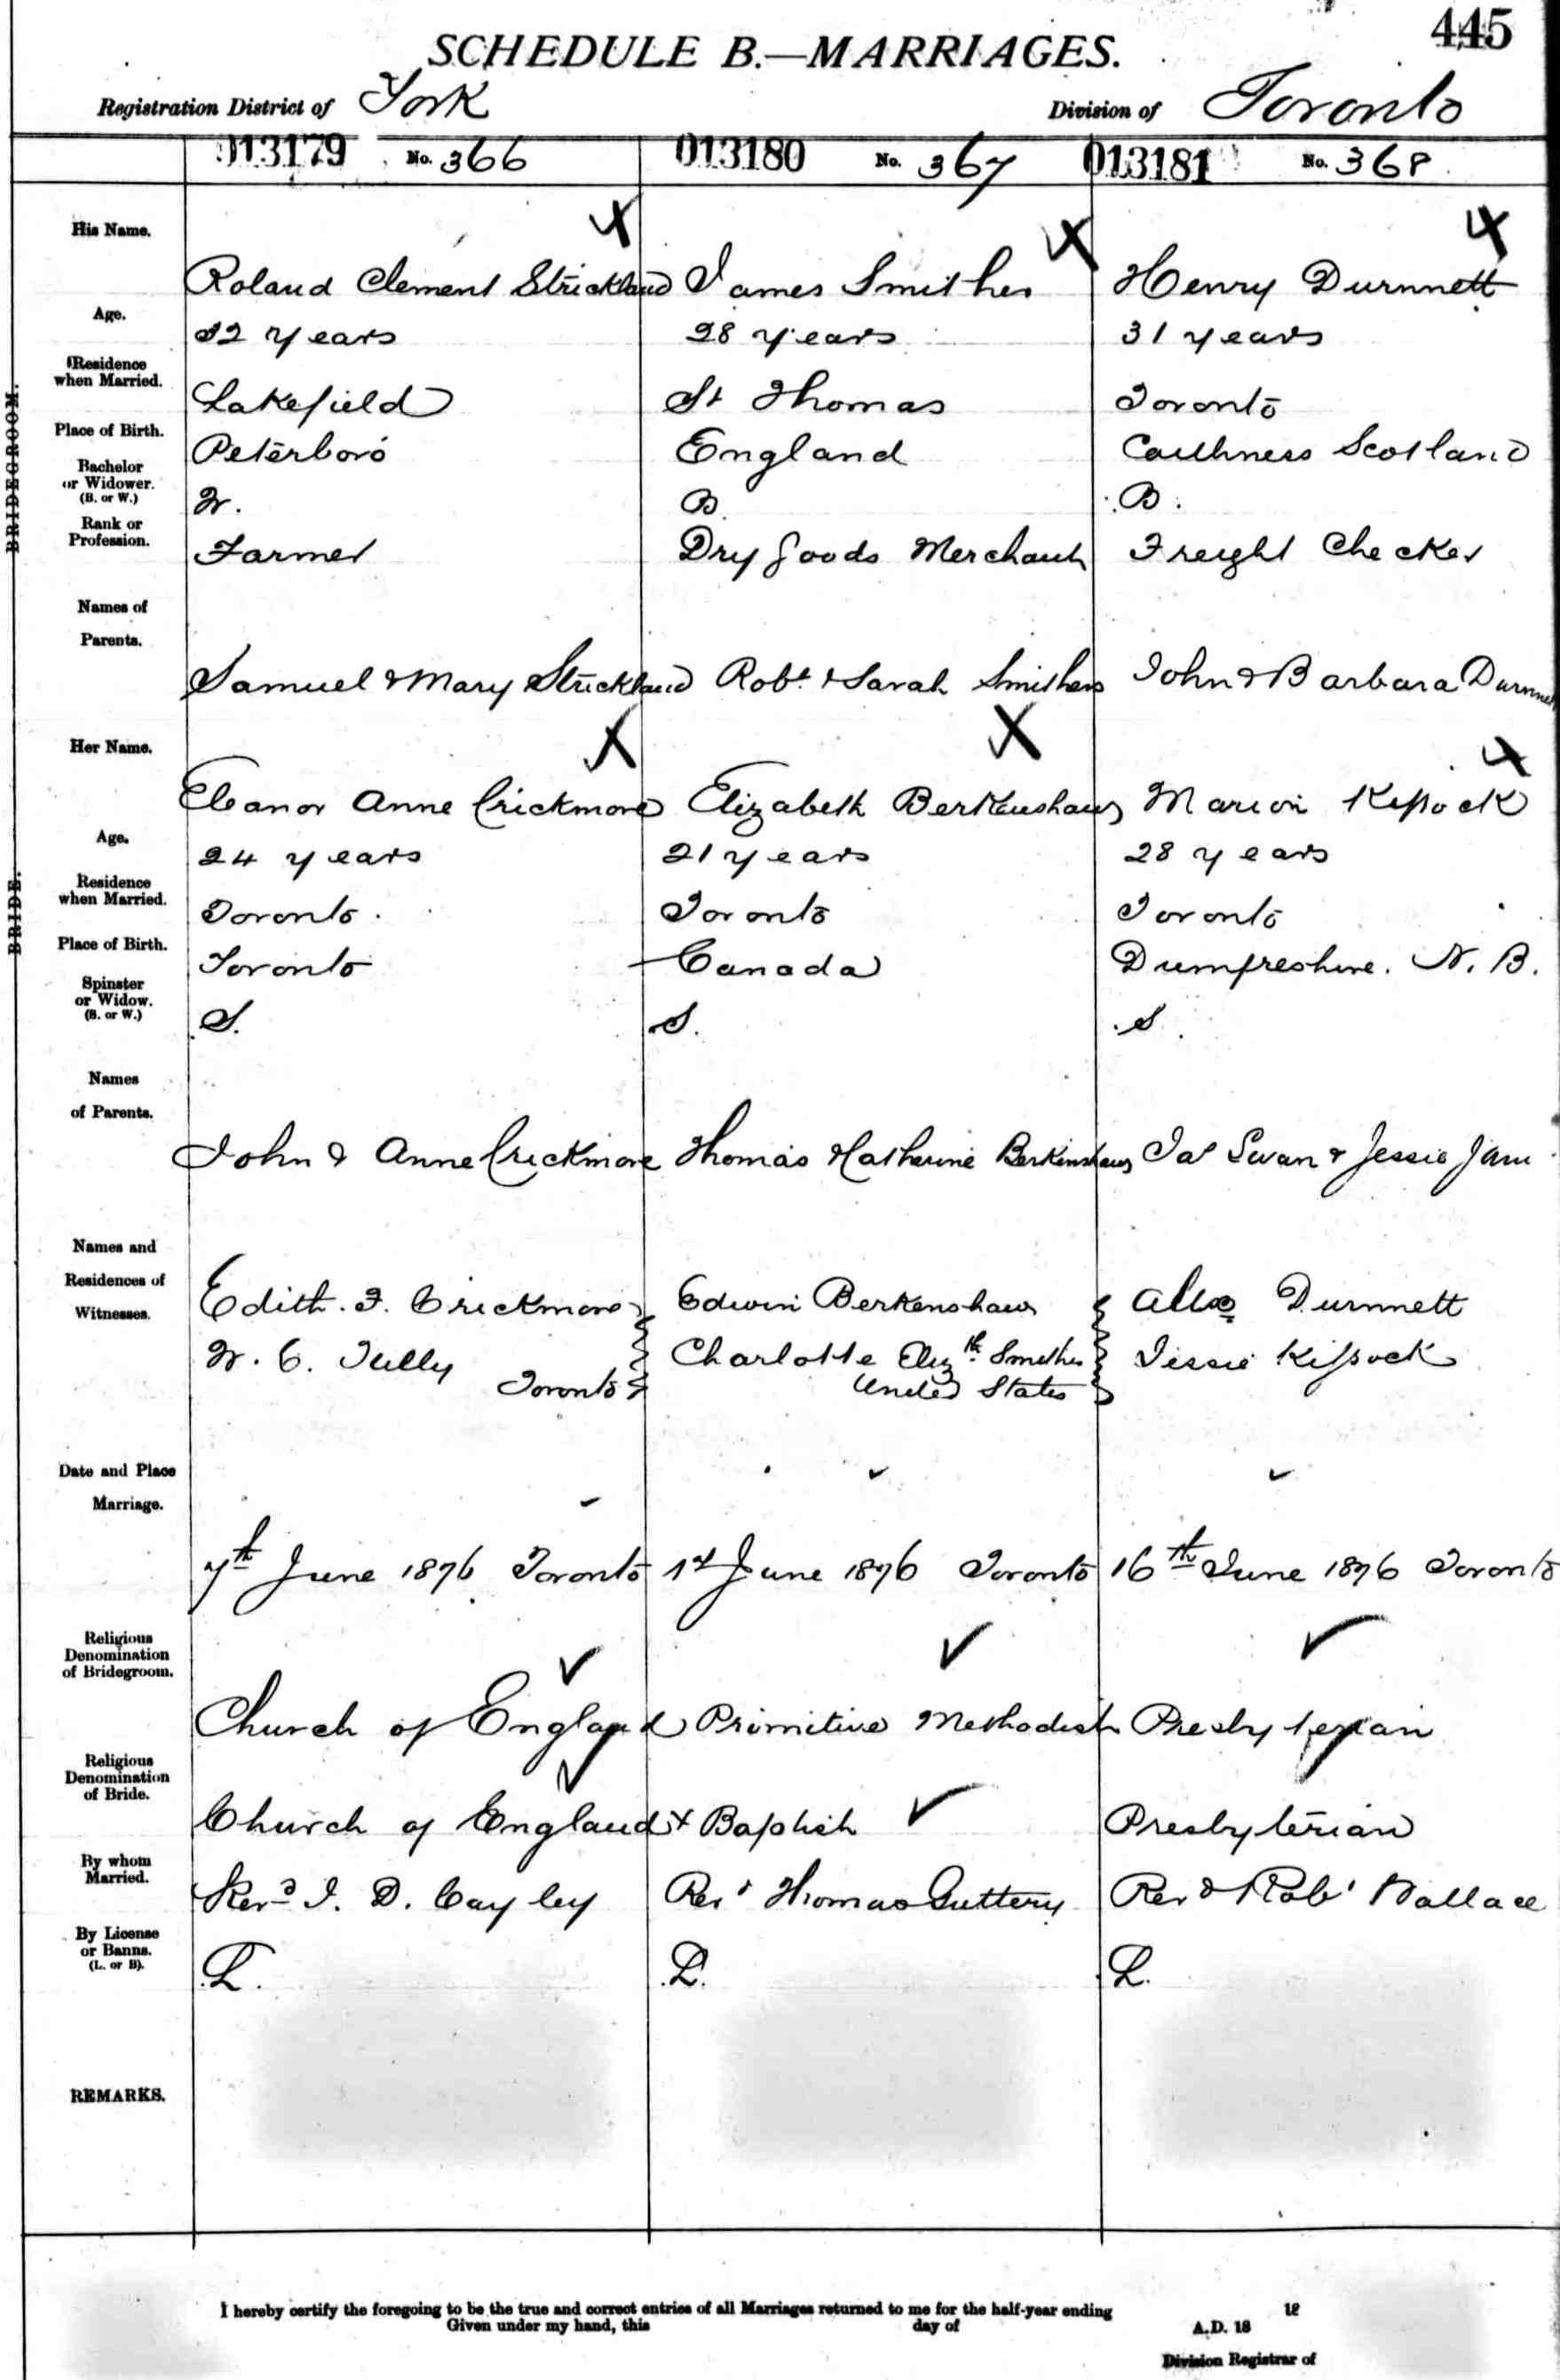 marriage record - roland strickland + eleanor crickmore 1876.jpg